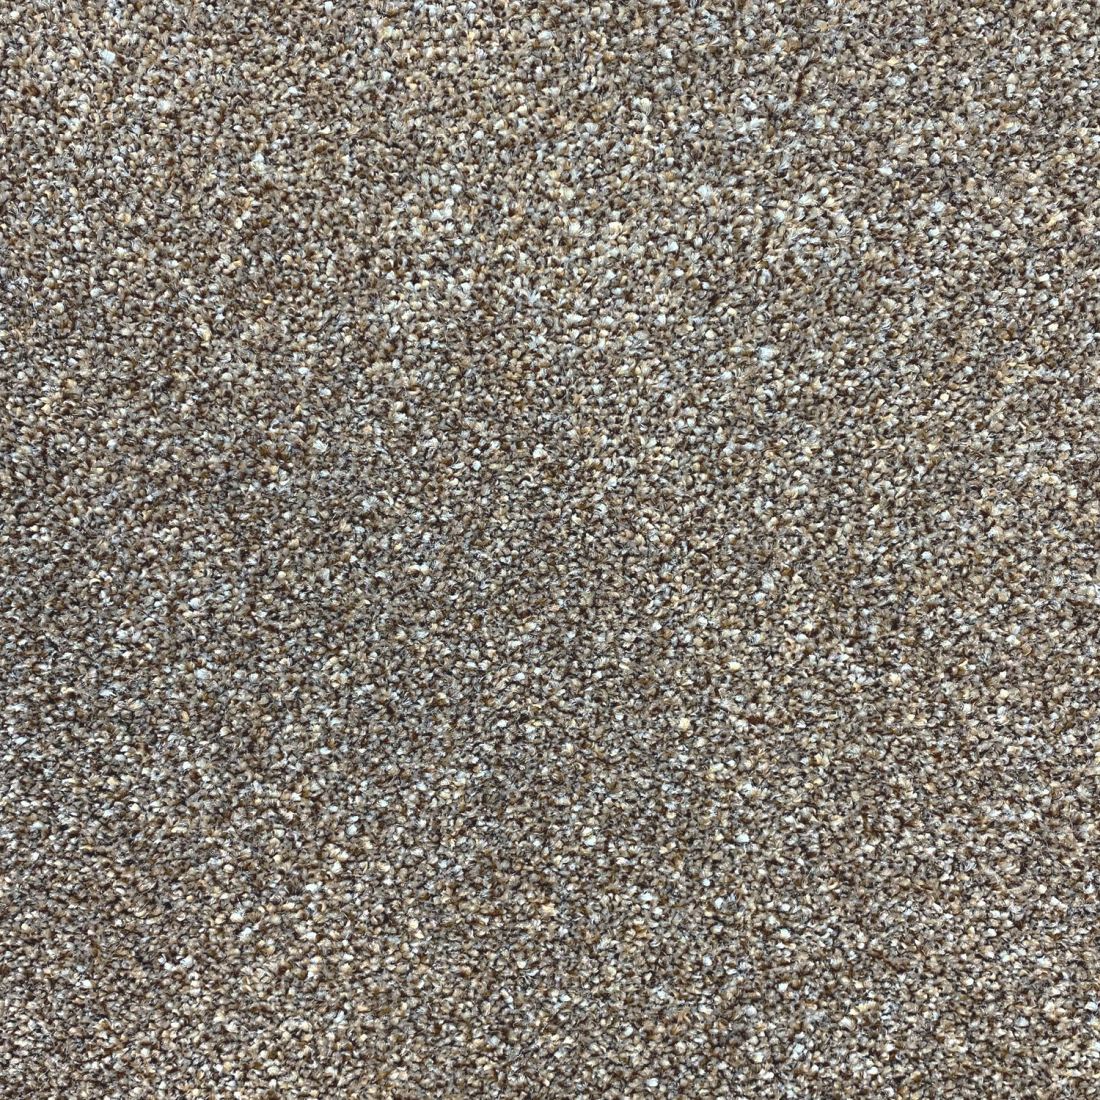 Invincible Rustic Stain Resistant Twist Carpet - Splendour